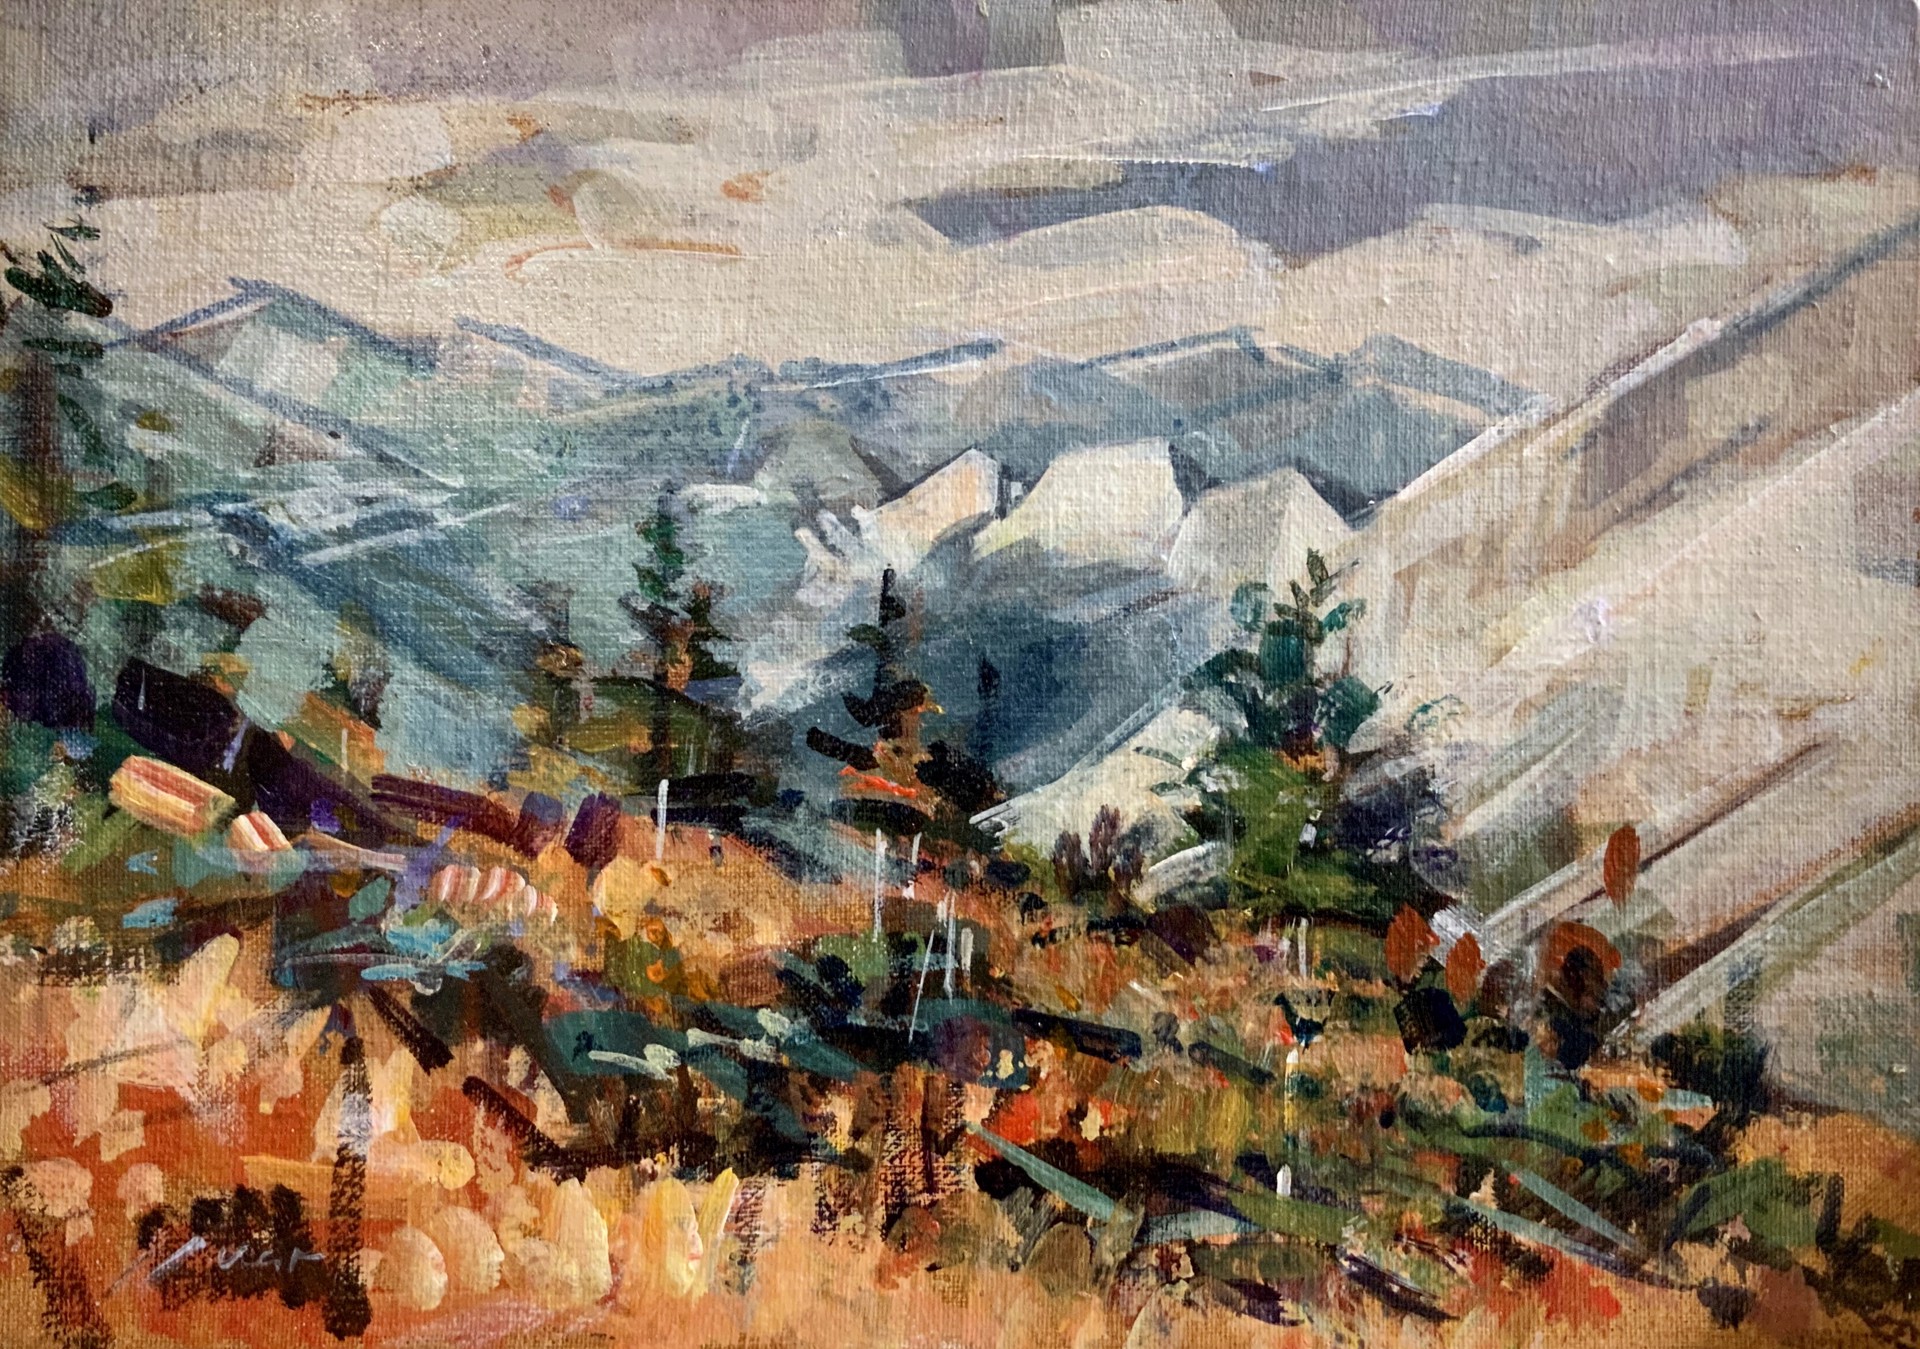 Sulphur Ridge Area by Jim Vest